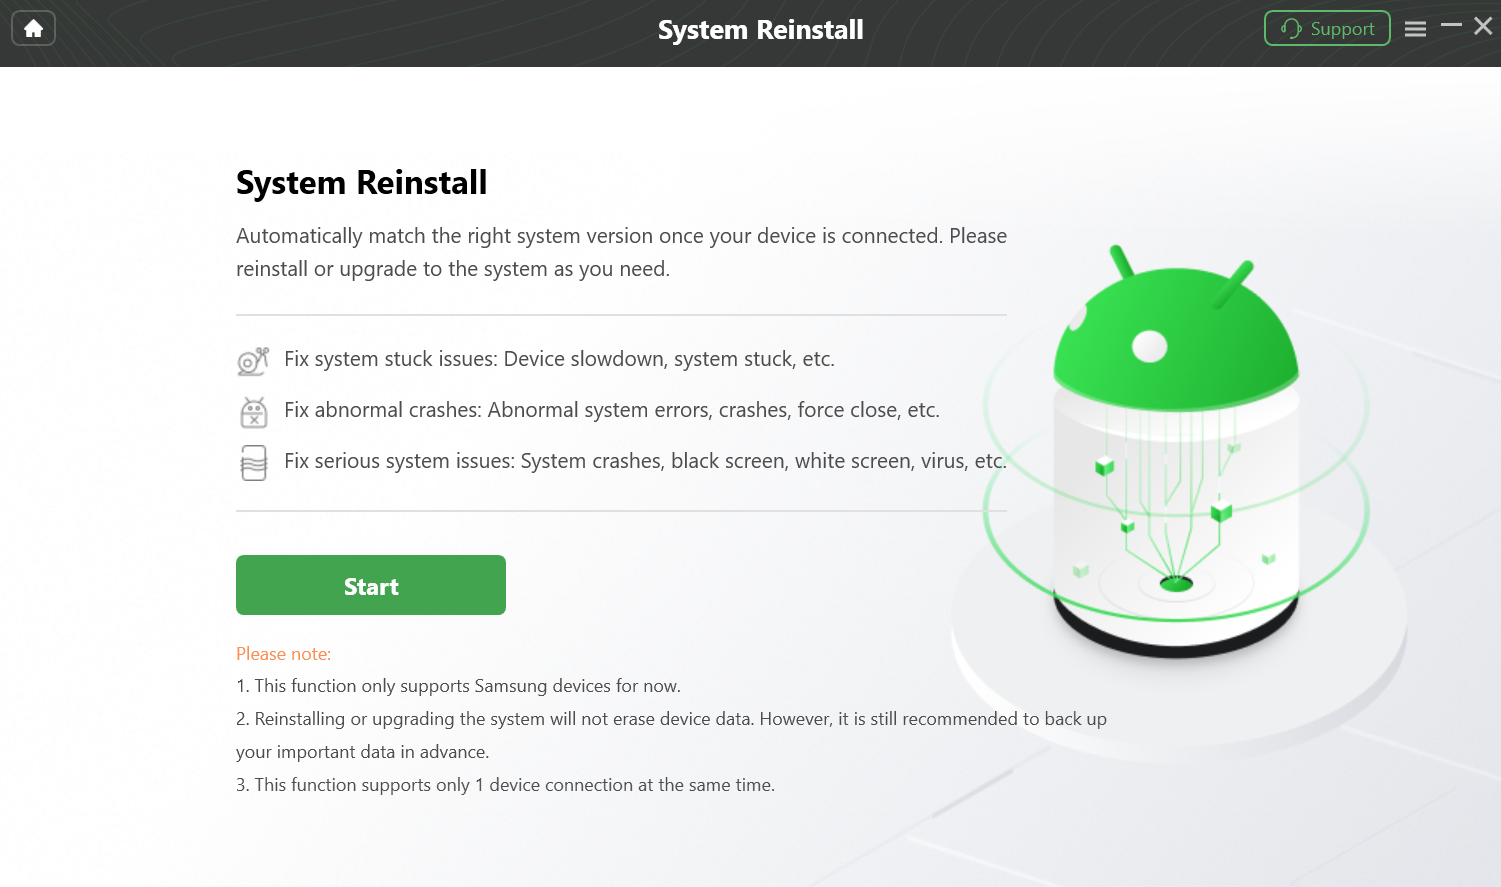 Click Start Button to Reinstall or Upgrade OS